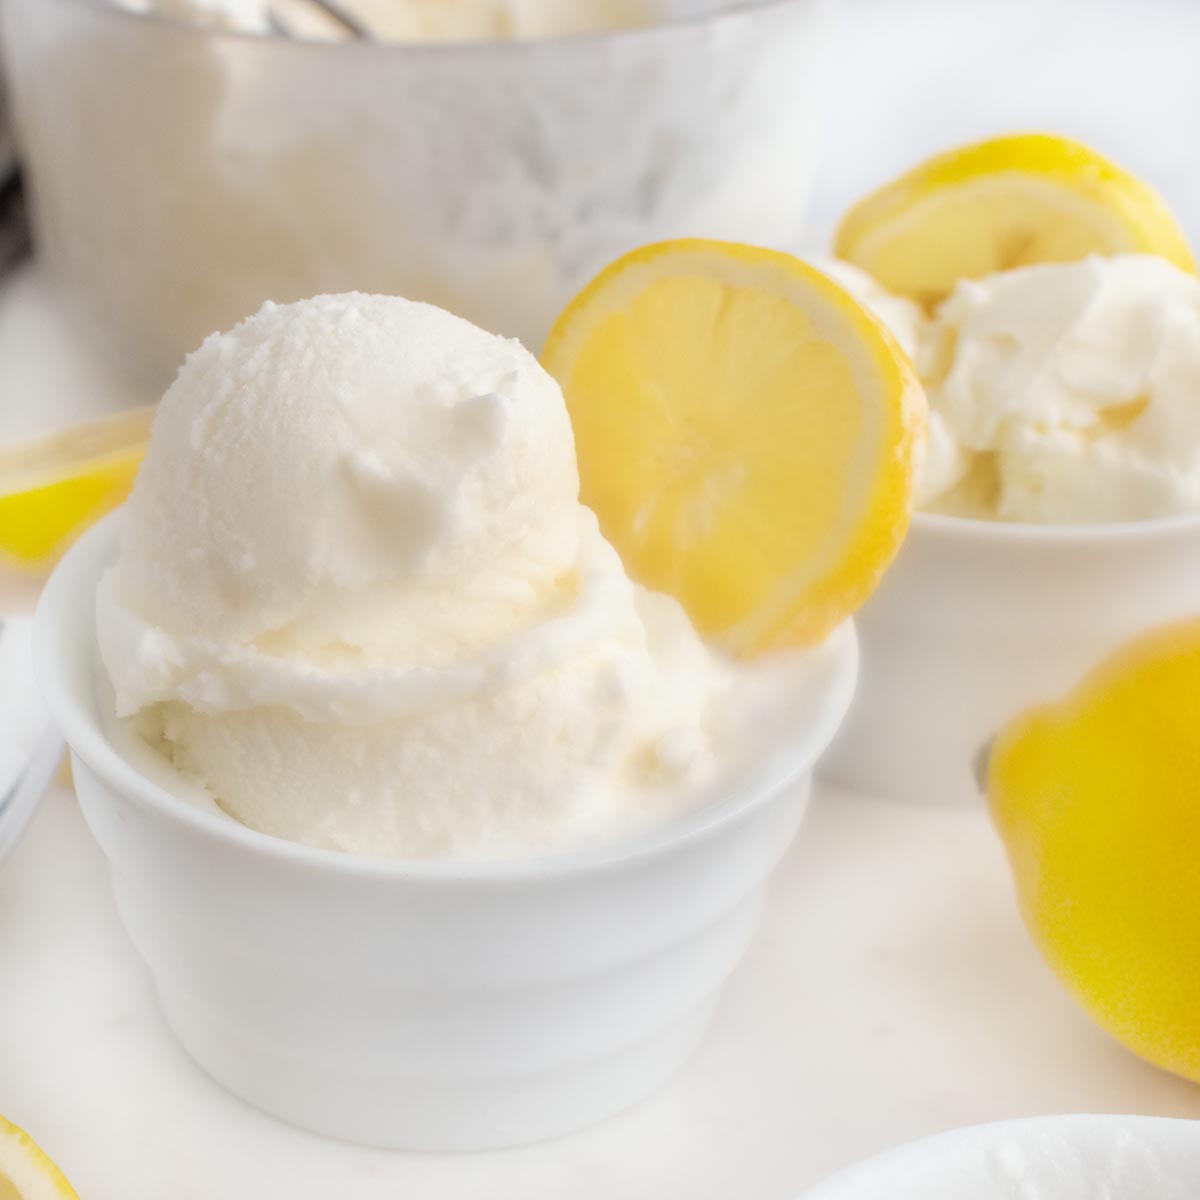 scoops of lemon gelato in a bowl with a lemon slice